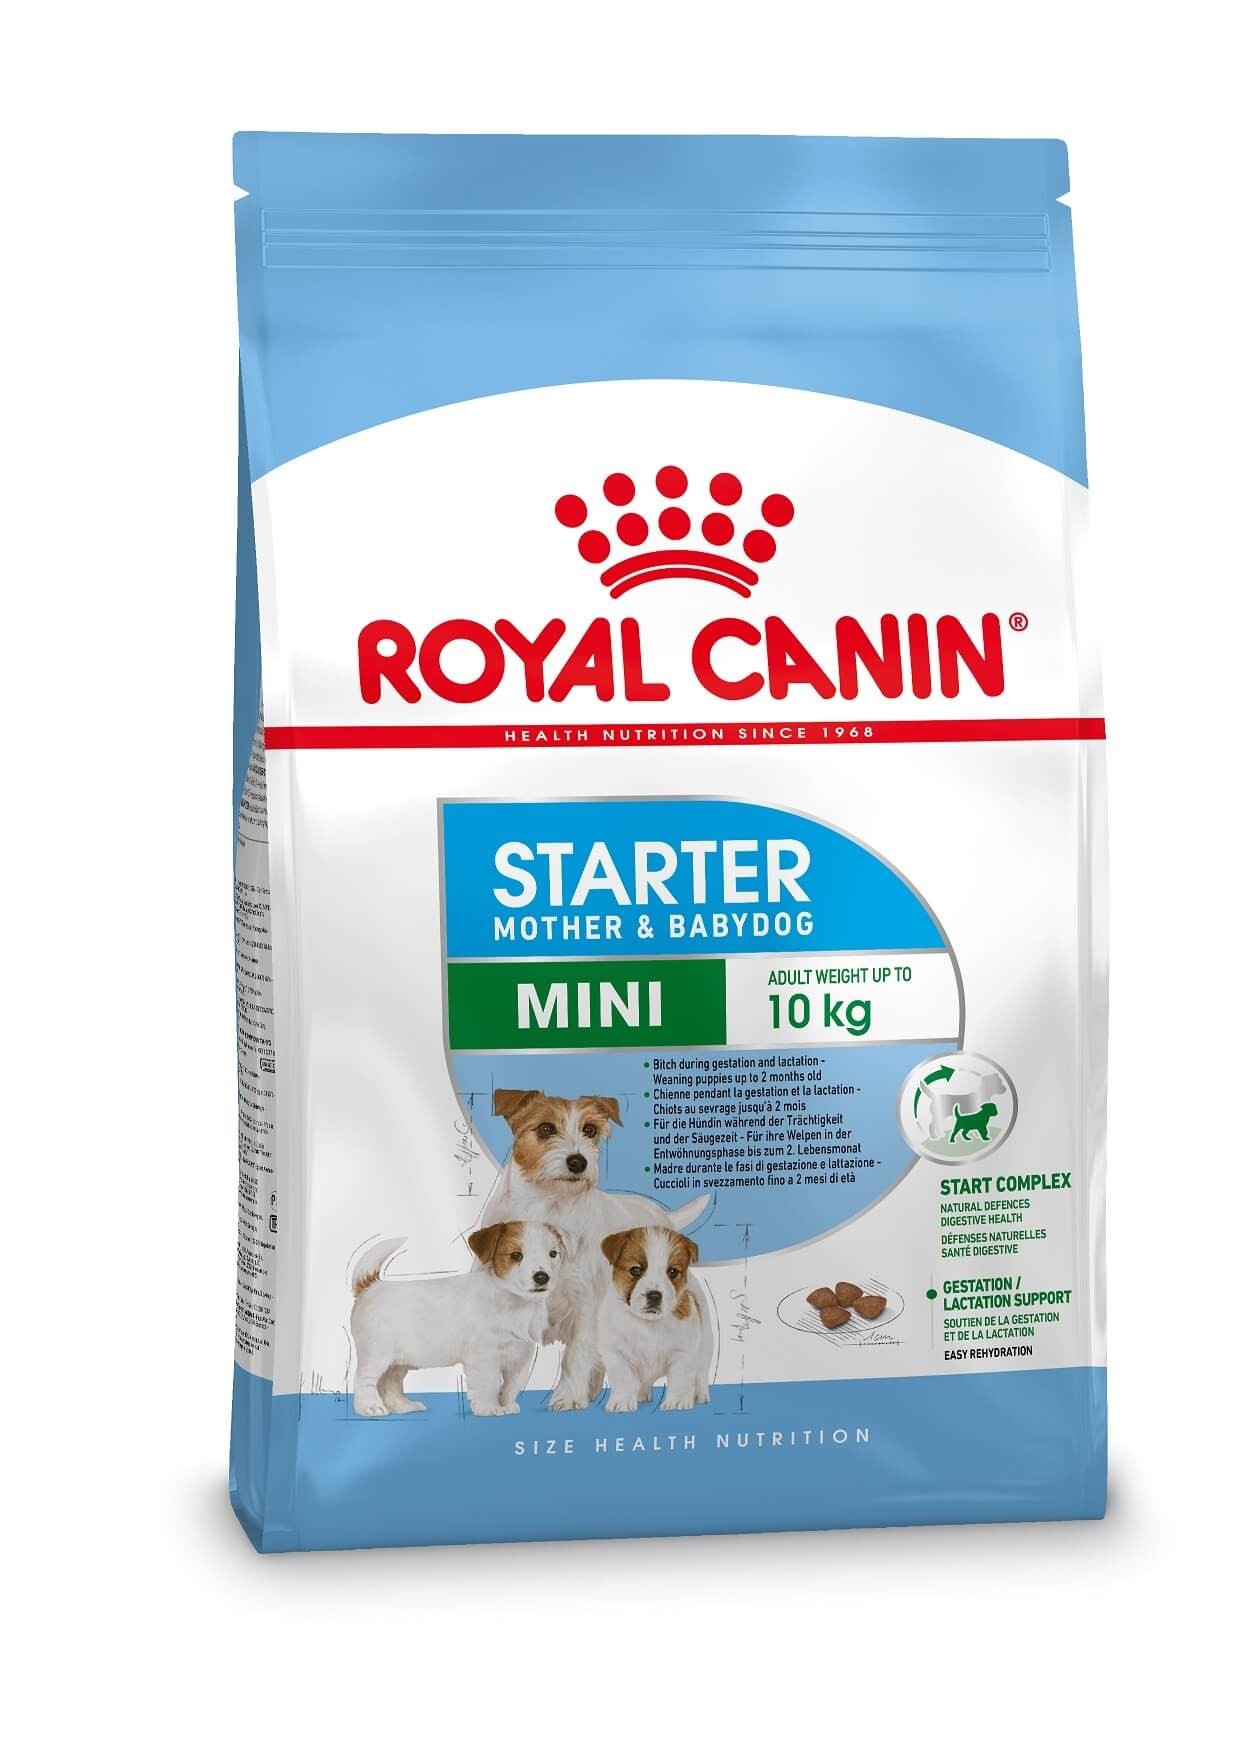 Royal Canin Mini Starter Mother and Babydog hundfoder